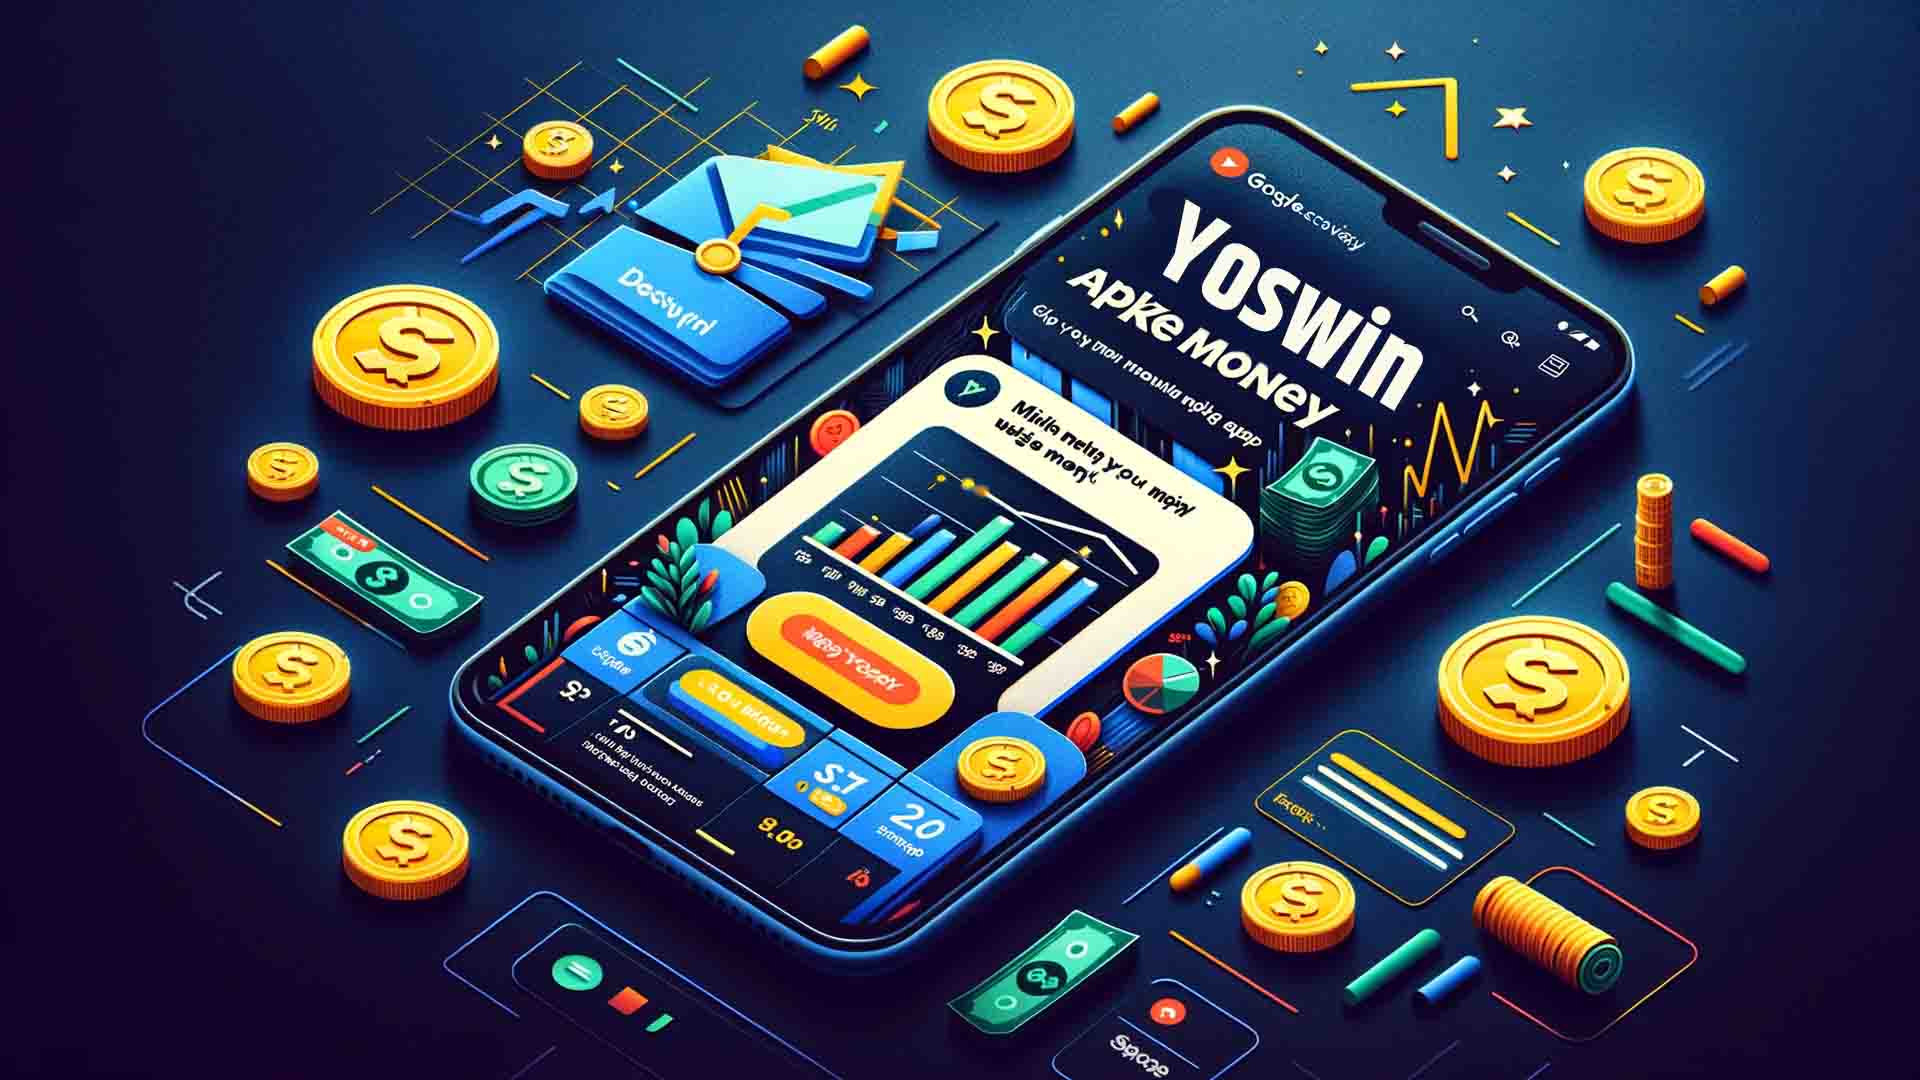 Yoswin App